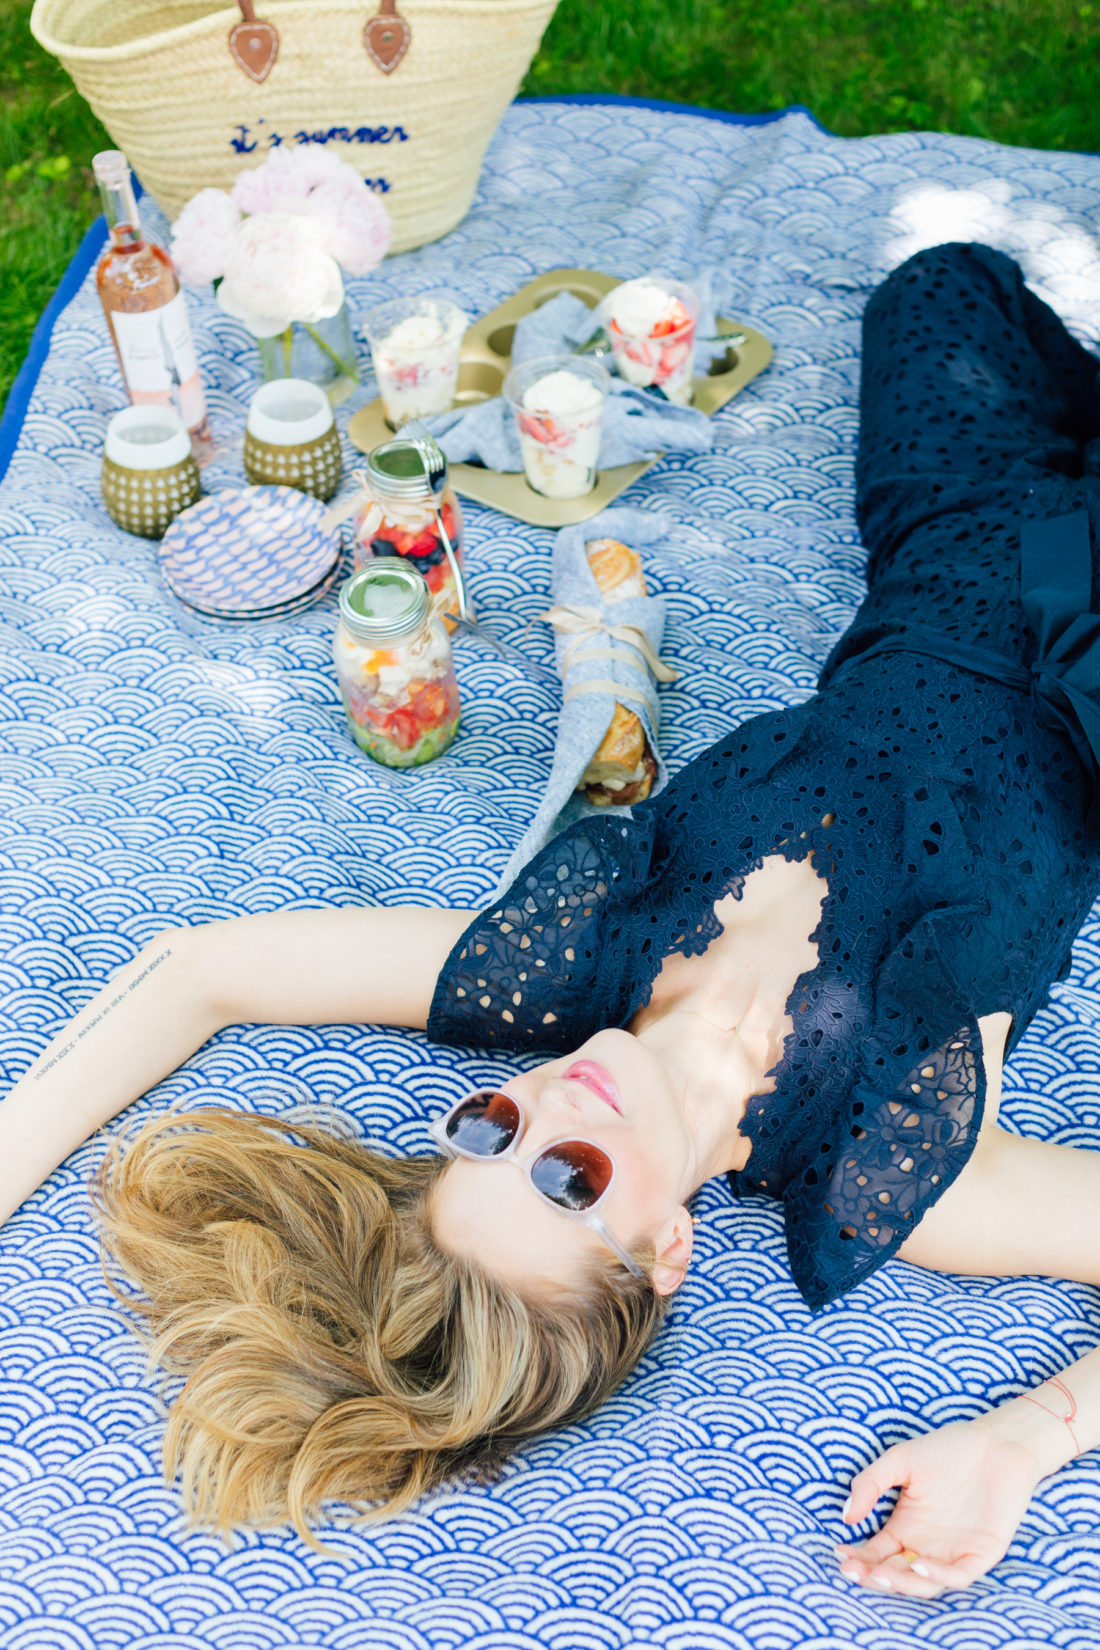 Eva Amurri Martino lies down on a picnic blanket